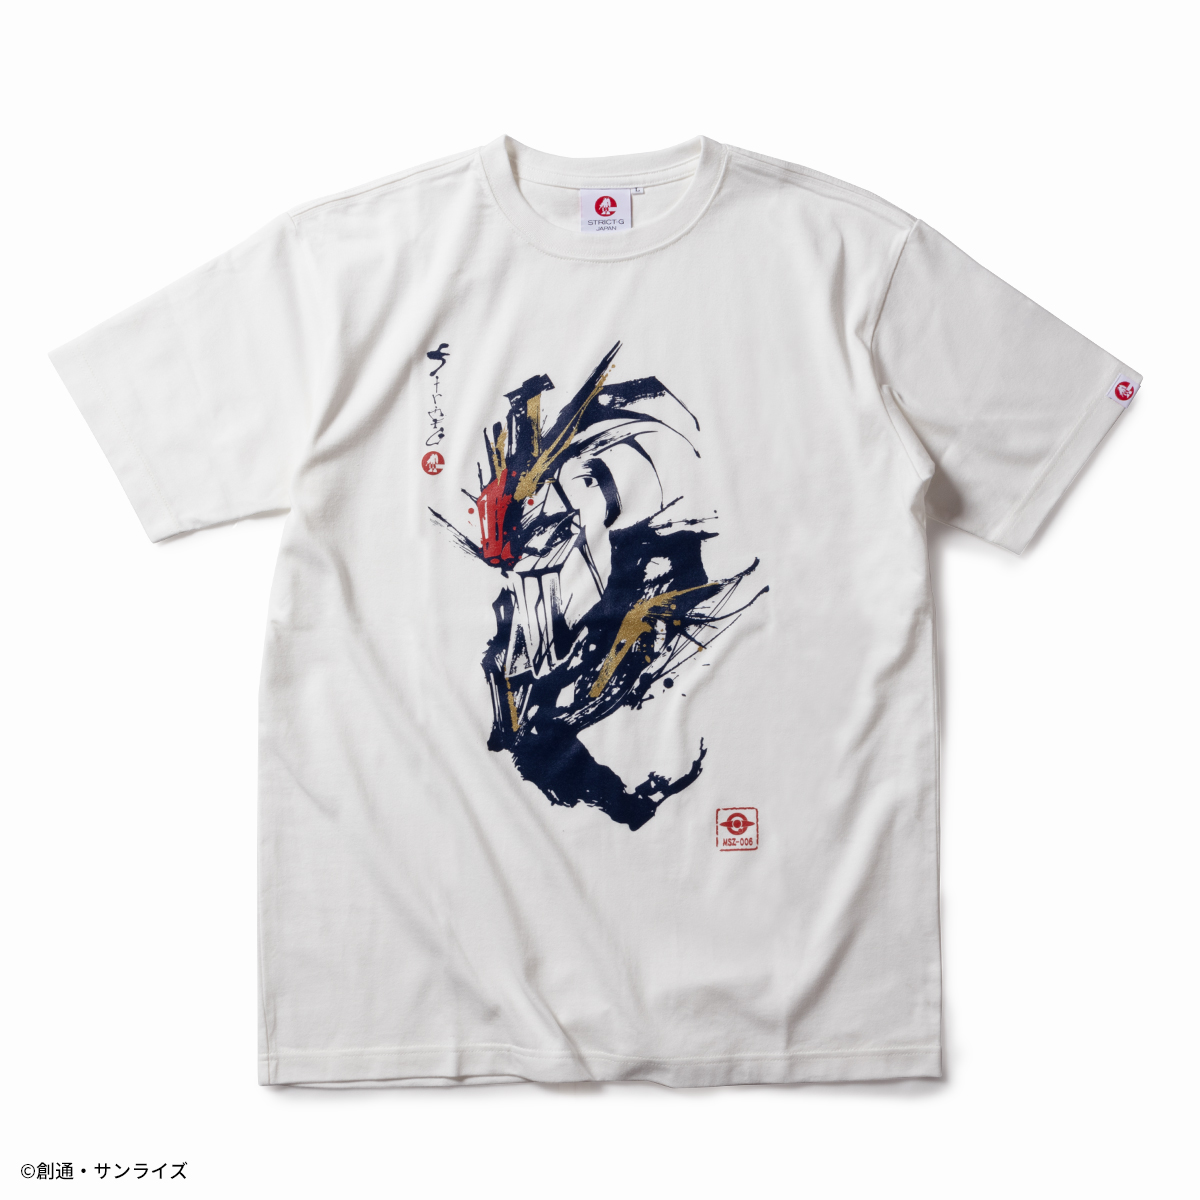 STRICT-G JAPAN『機動戦士Zガンダム』筆絵風横顔Tシャツ